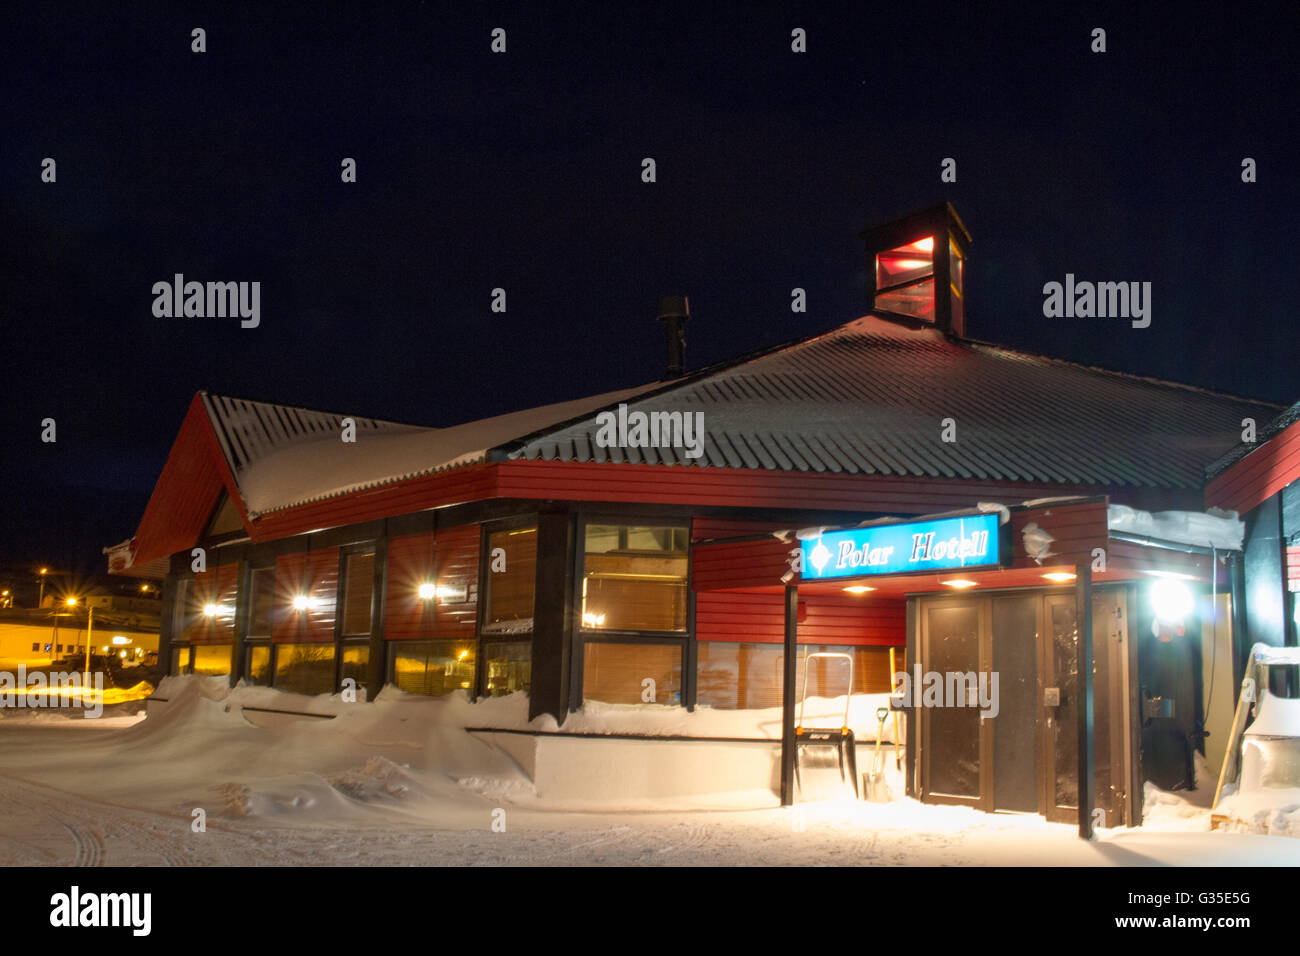 The exterior of the Polar Hotel at night, Batsfjord. Stock Photo